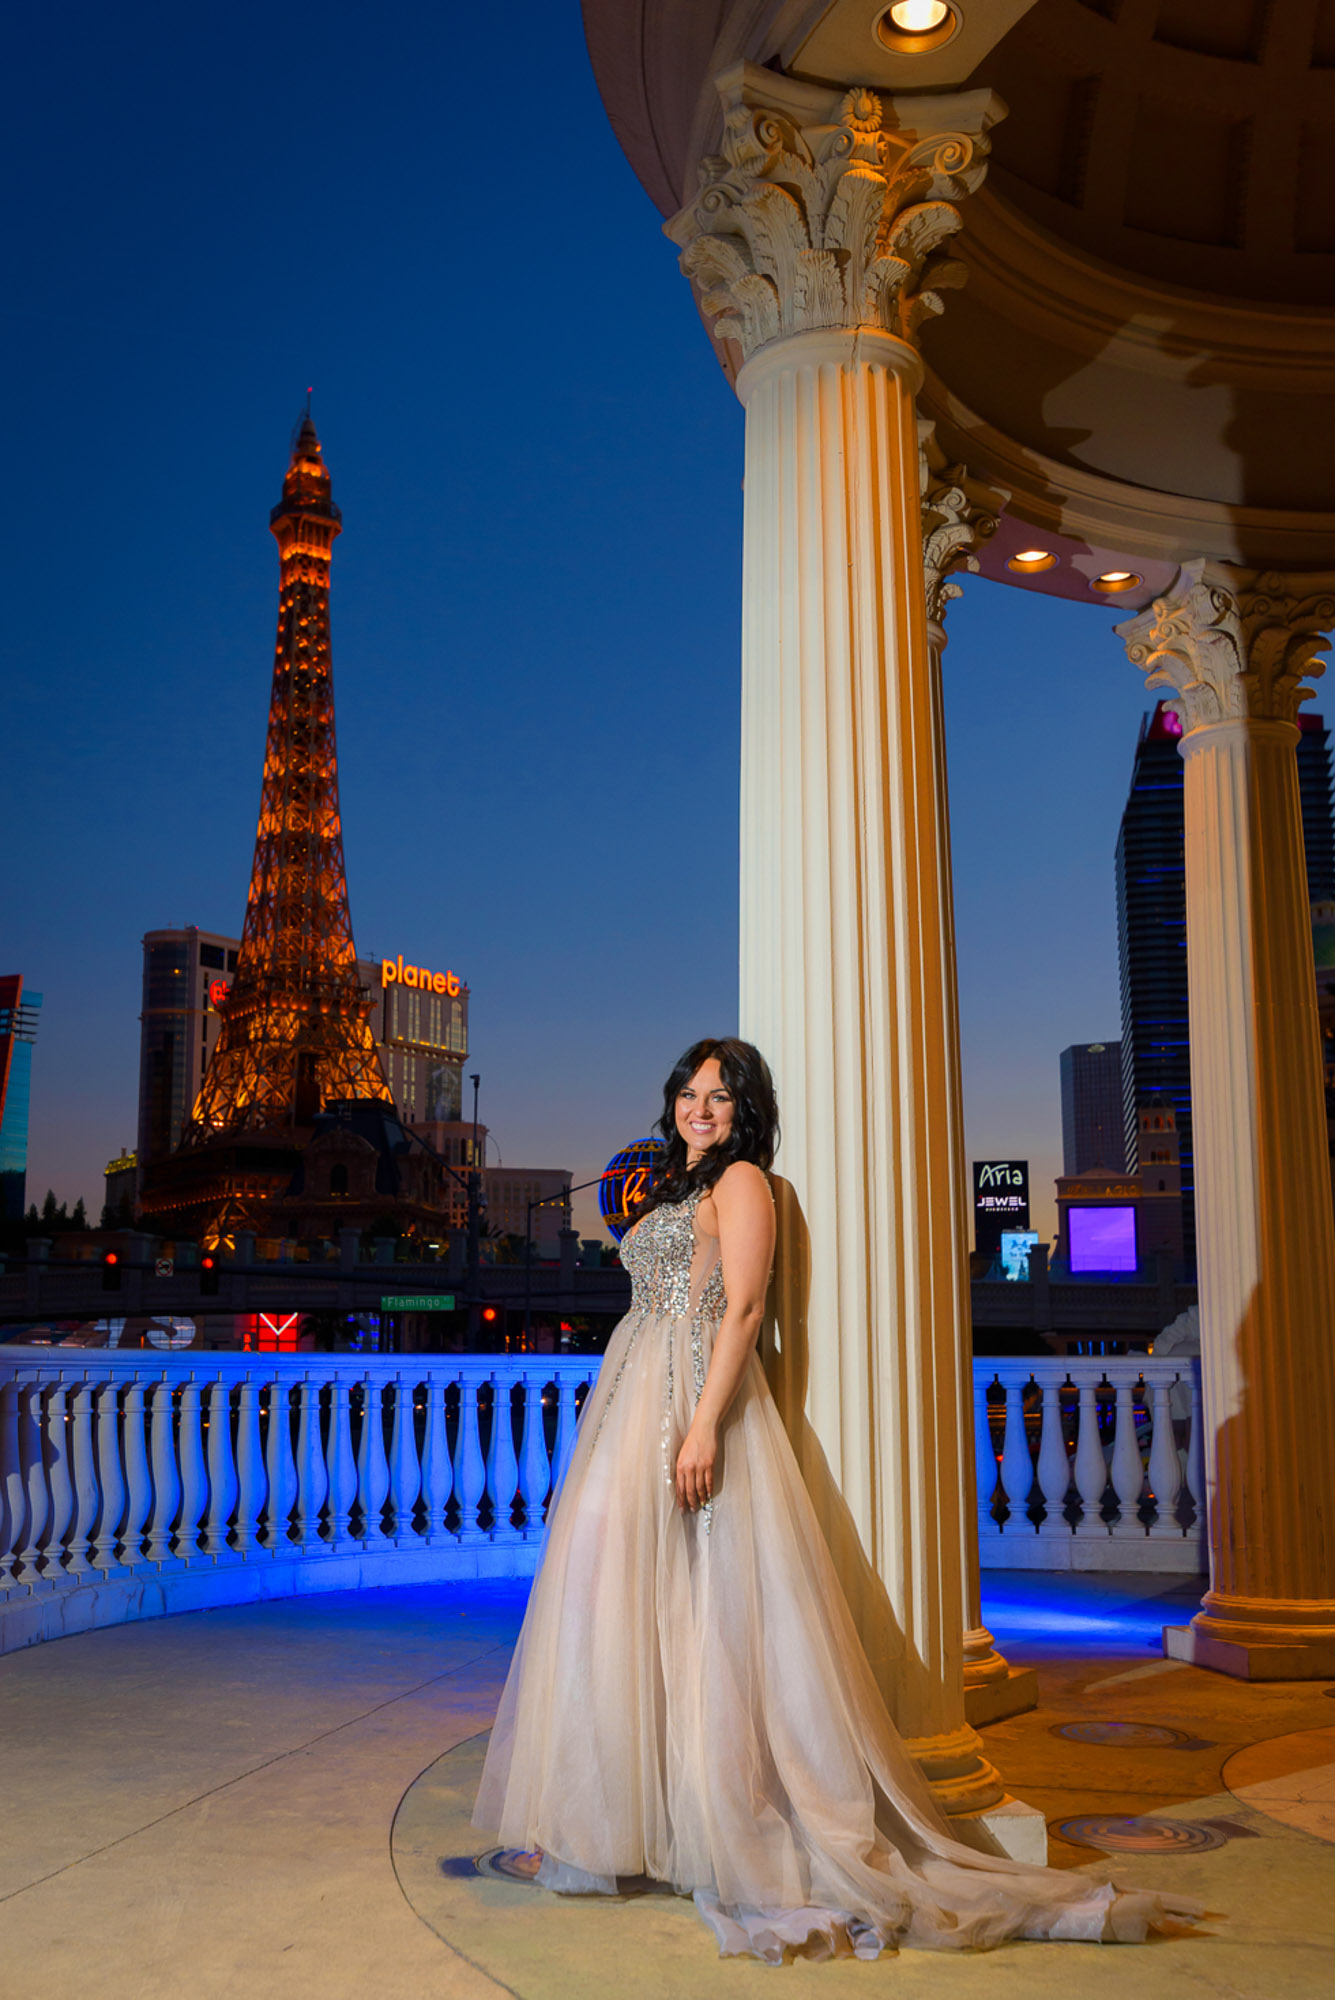 Wedding photographer Las Vegas strip | Caesar gazebo weddings